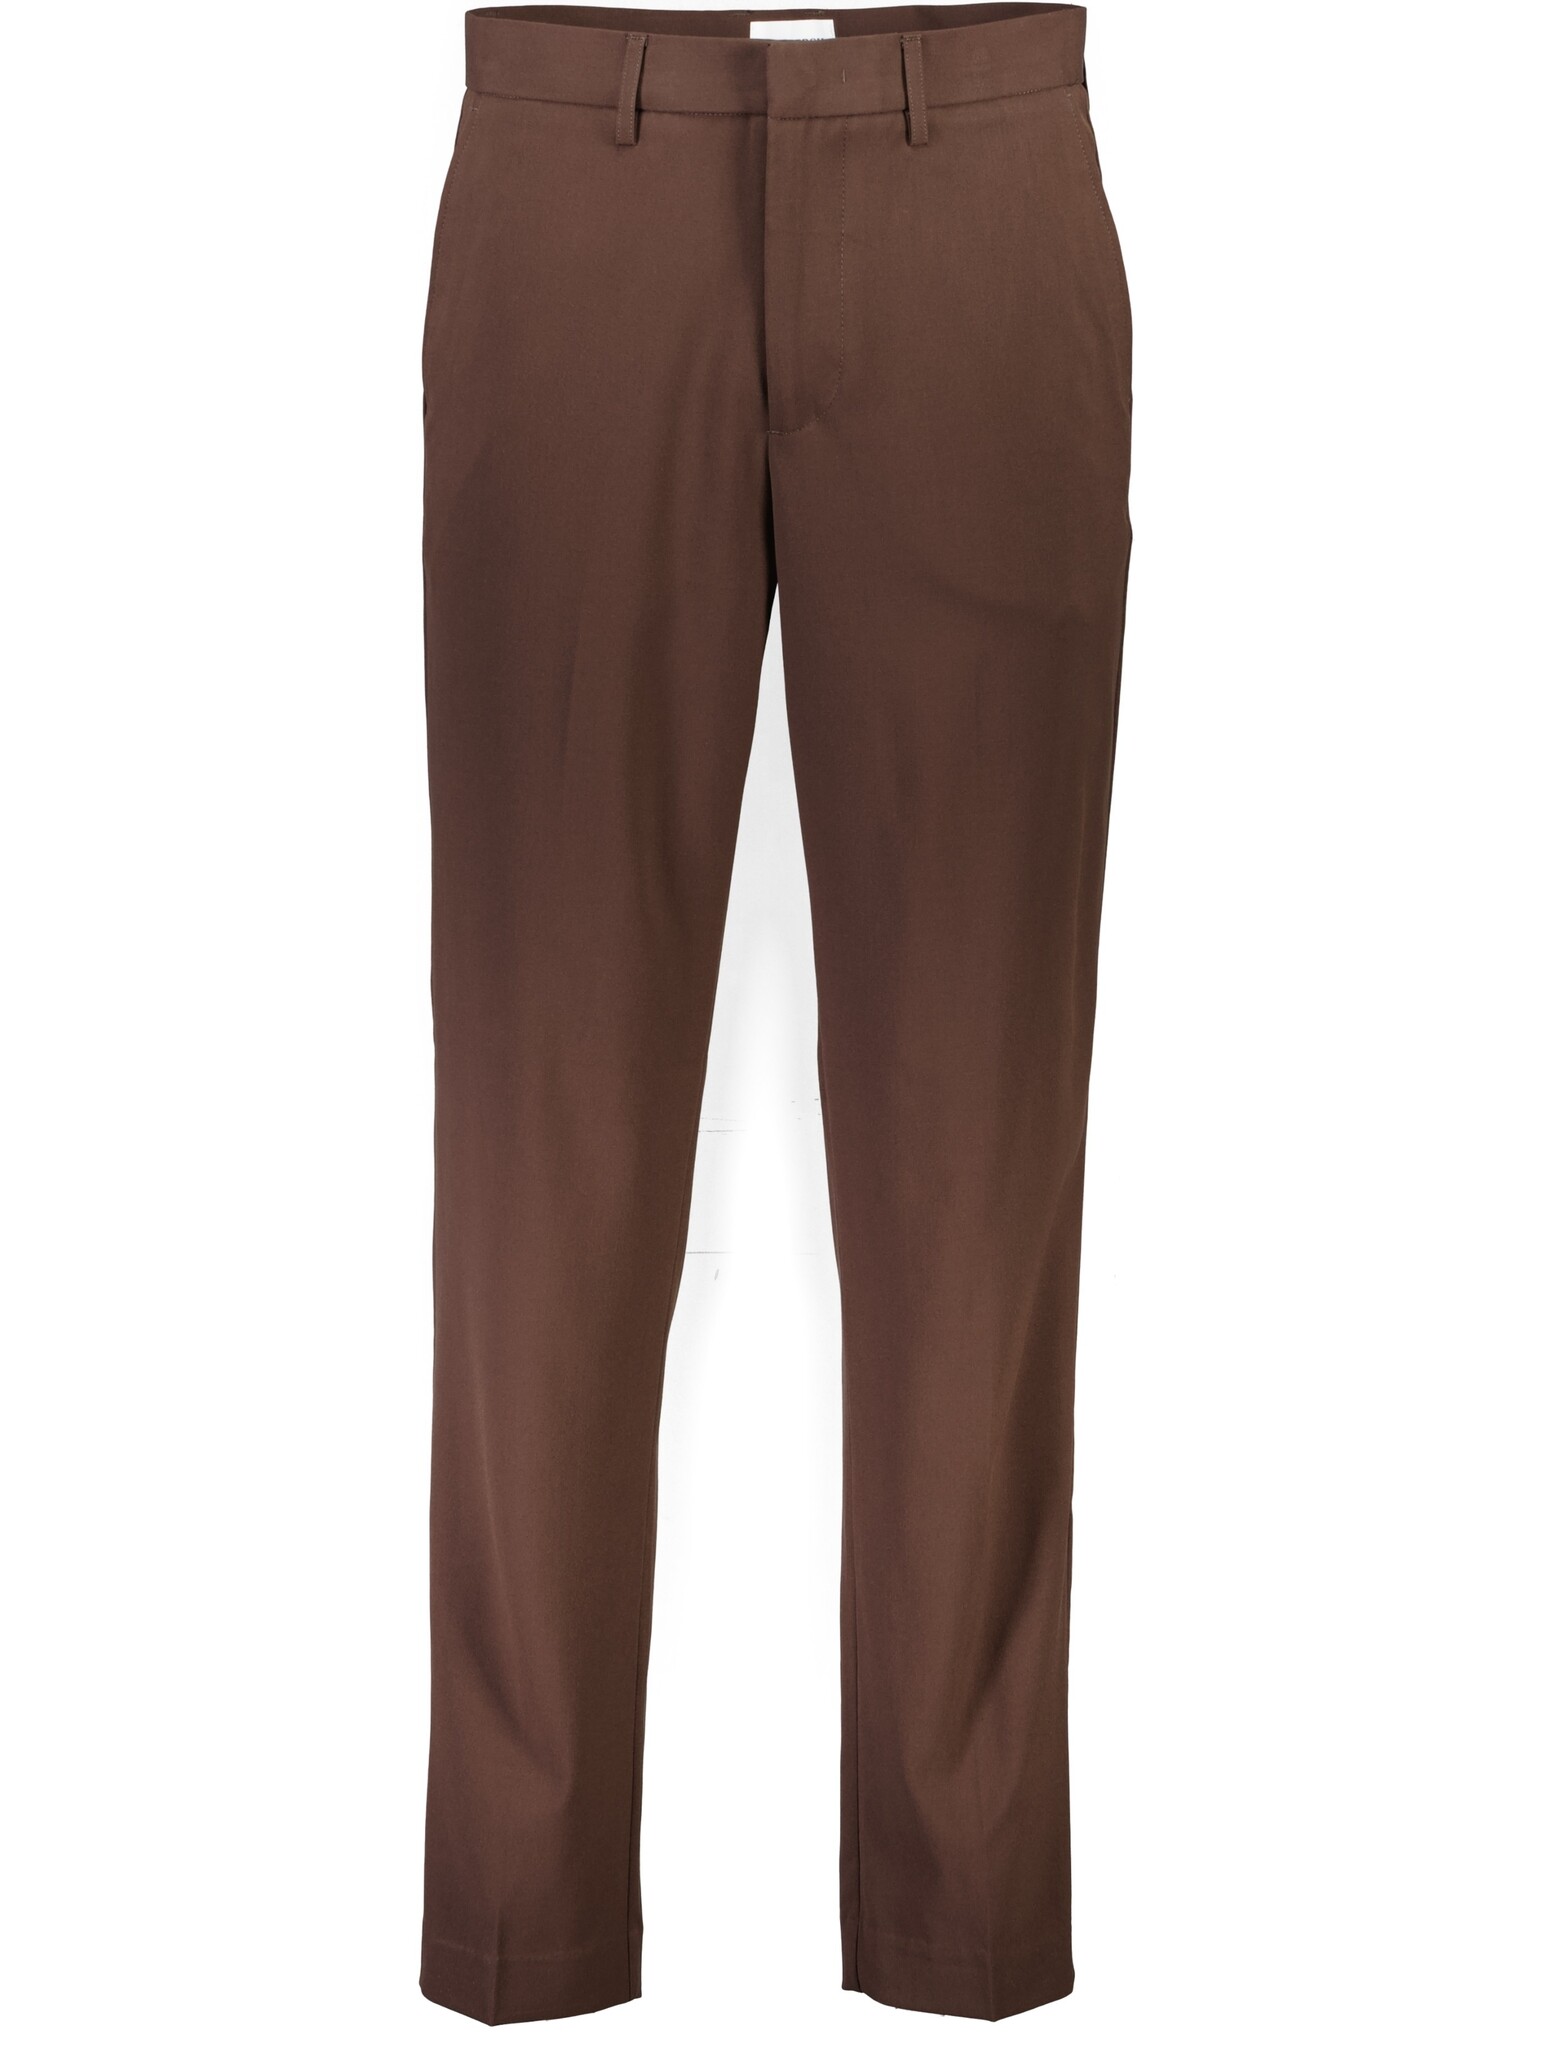 Buy MANCREW Formal Pants for Men - Formal Pants for Men Combo Pack of 3 -  Black, Blue, Coffee Slim Fit (28) at Amazon.in